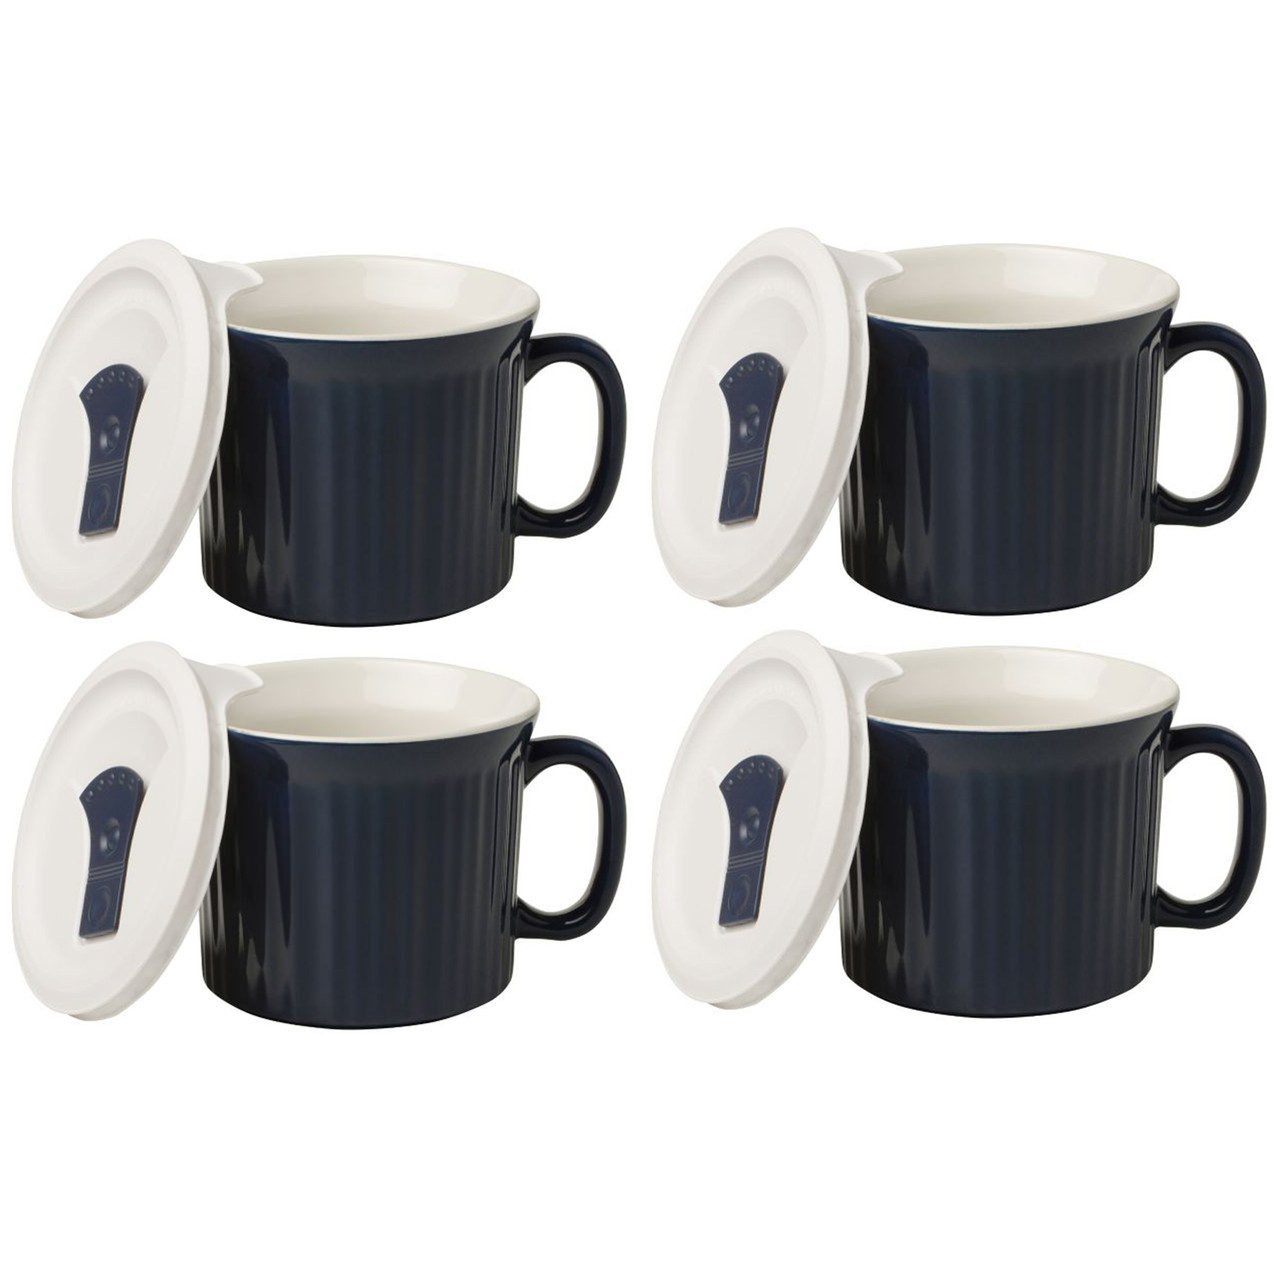 Complete Home Plastic Soup Mug Blue